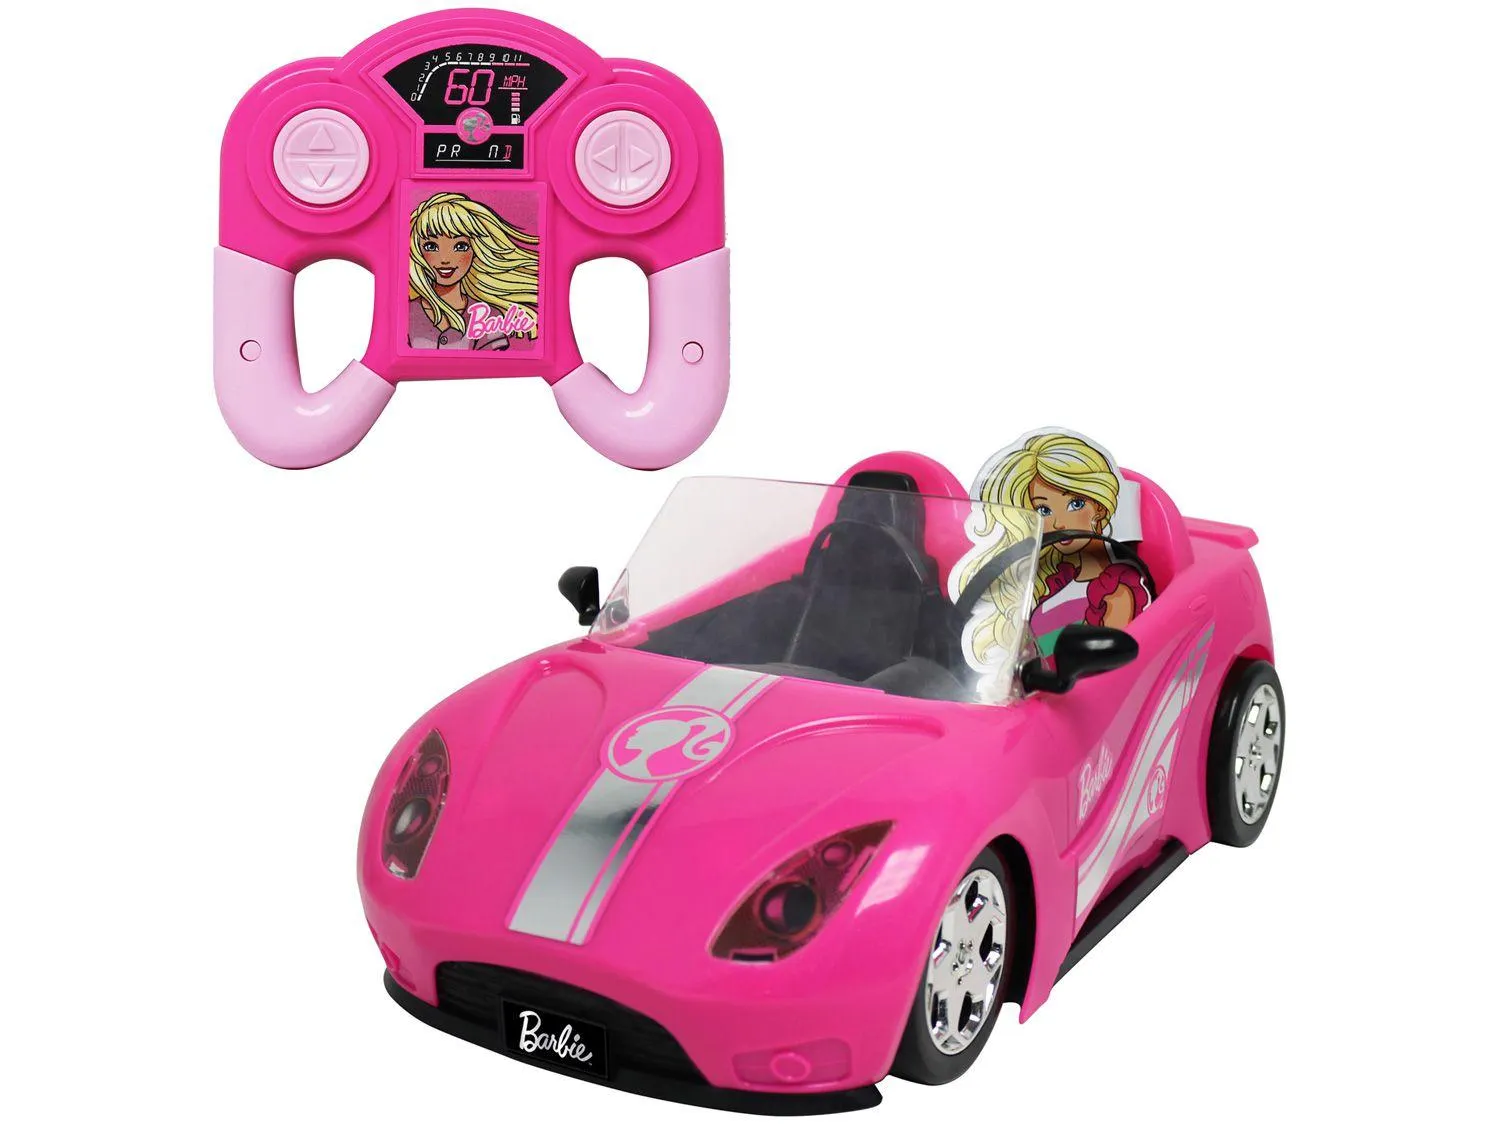 Carrinho de Controle Remoto Barbie Deluxe